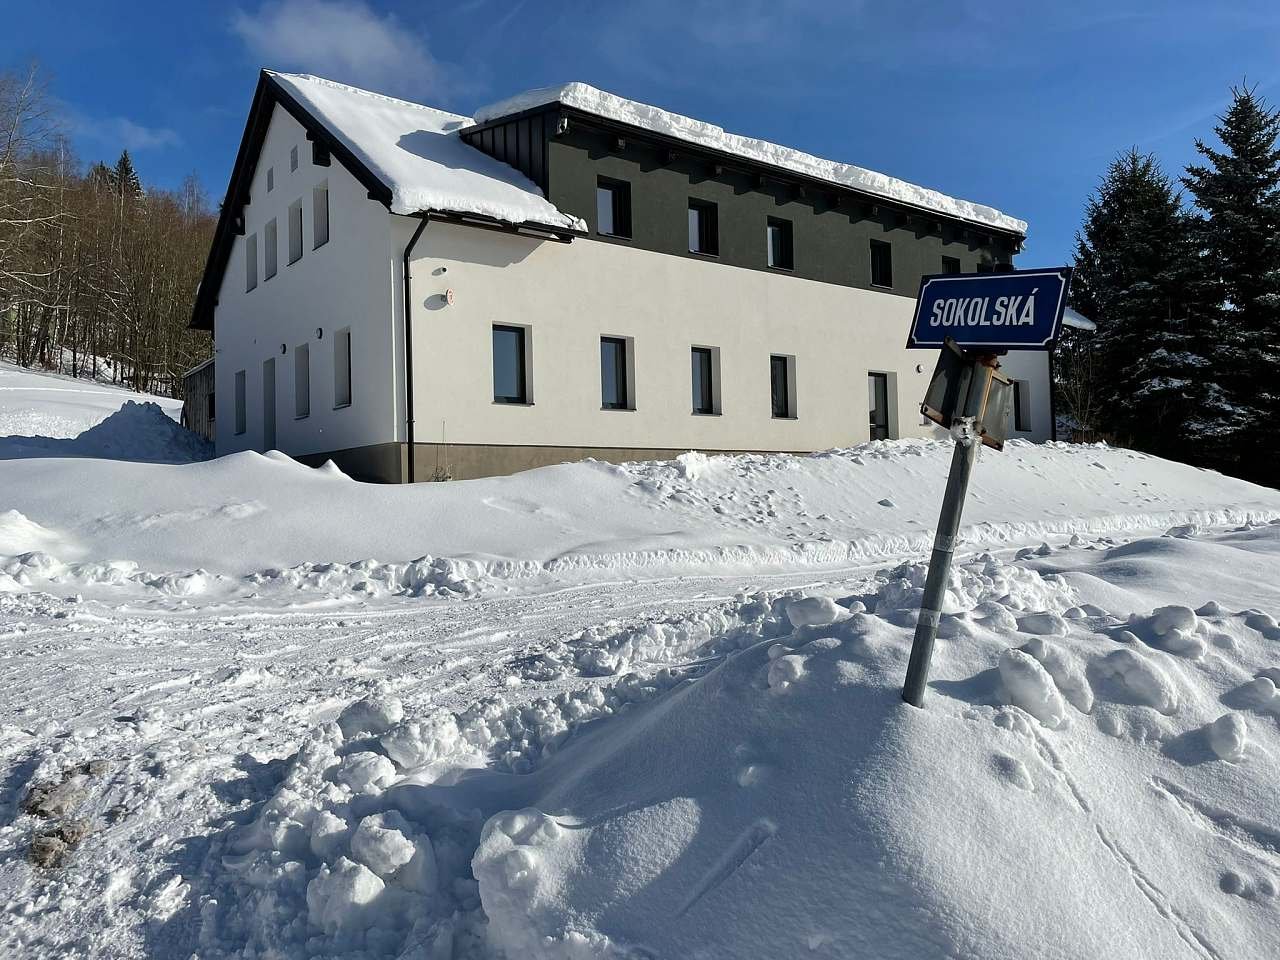 Chata Sokolská in inverno